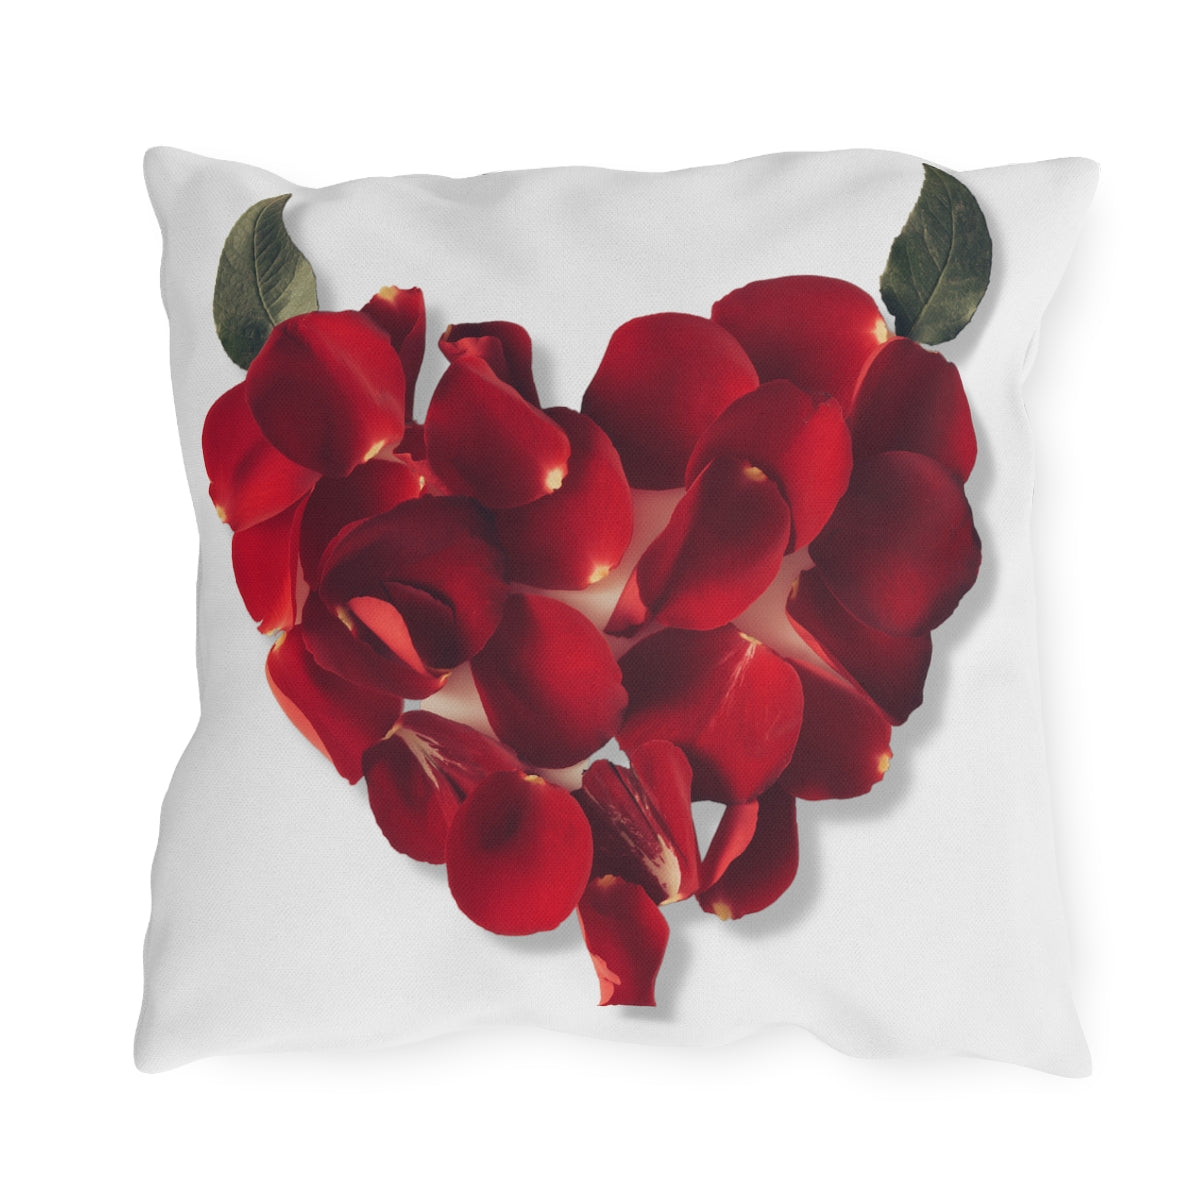 Horned Floral Heart Outdoor Pillows